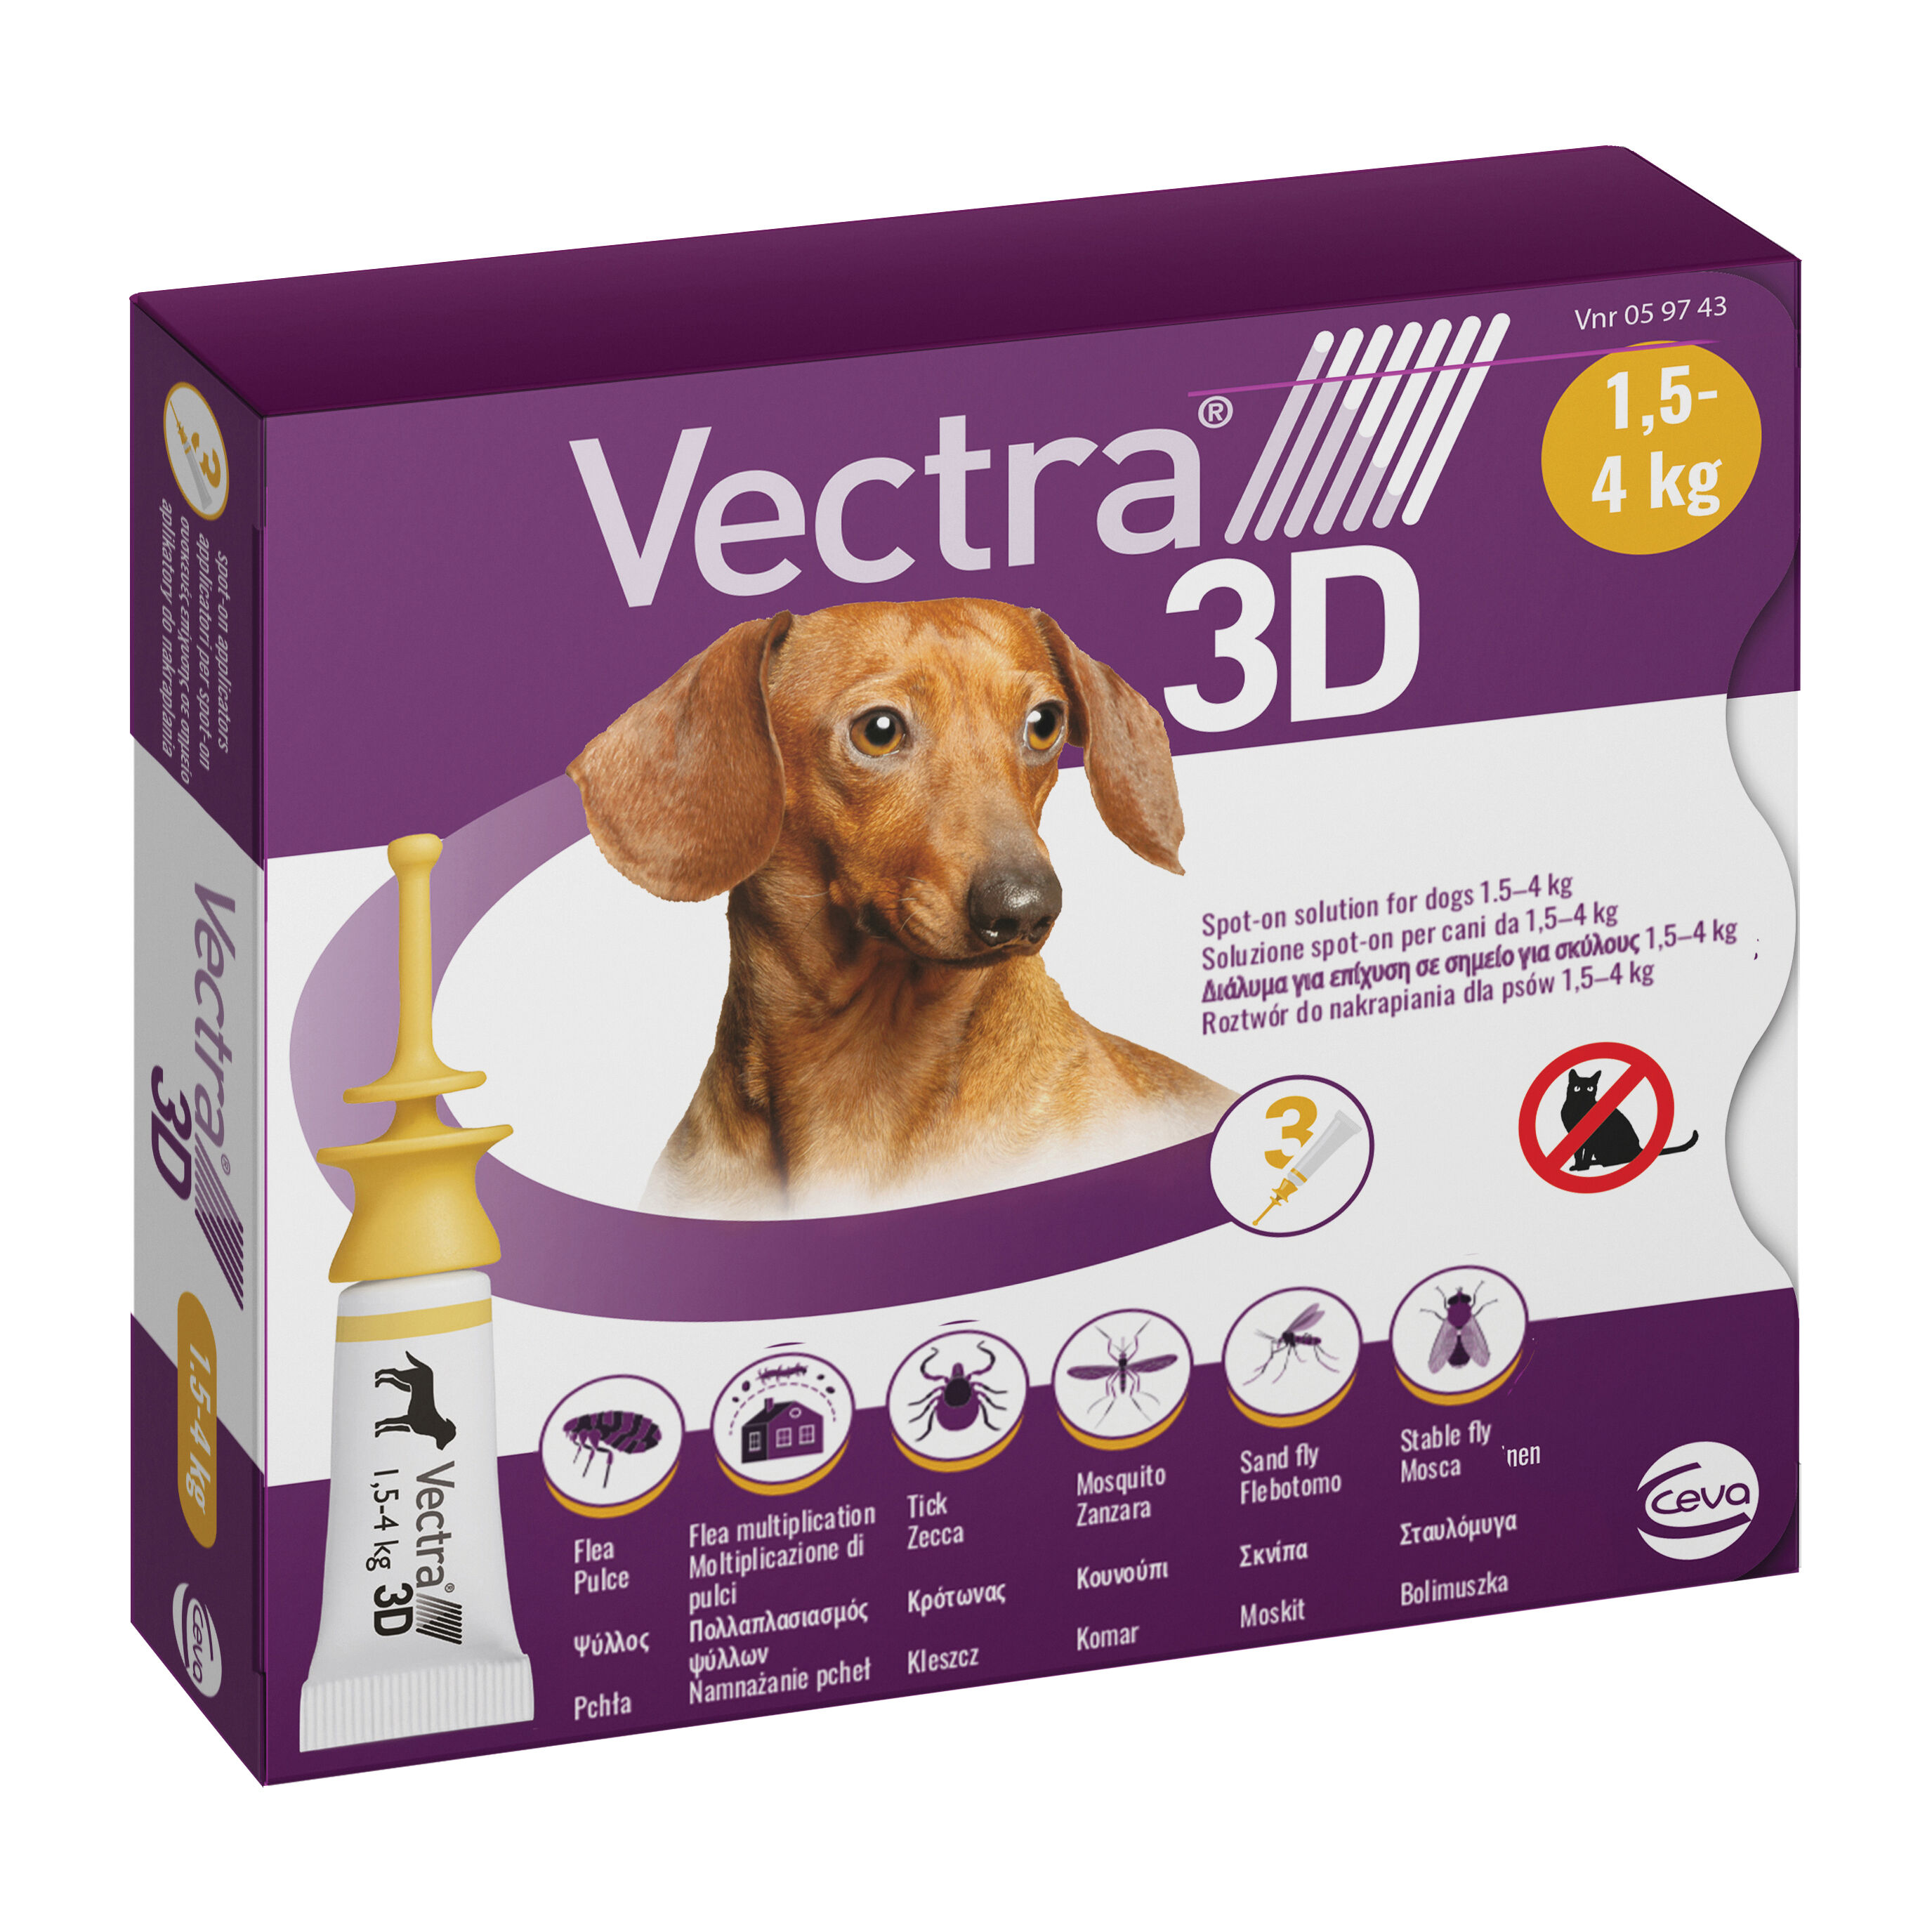 Ceva Salute Animale Spa Vectra 3d Spoton 3p. 1,5-4kggi